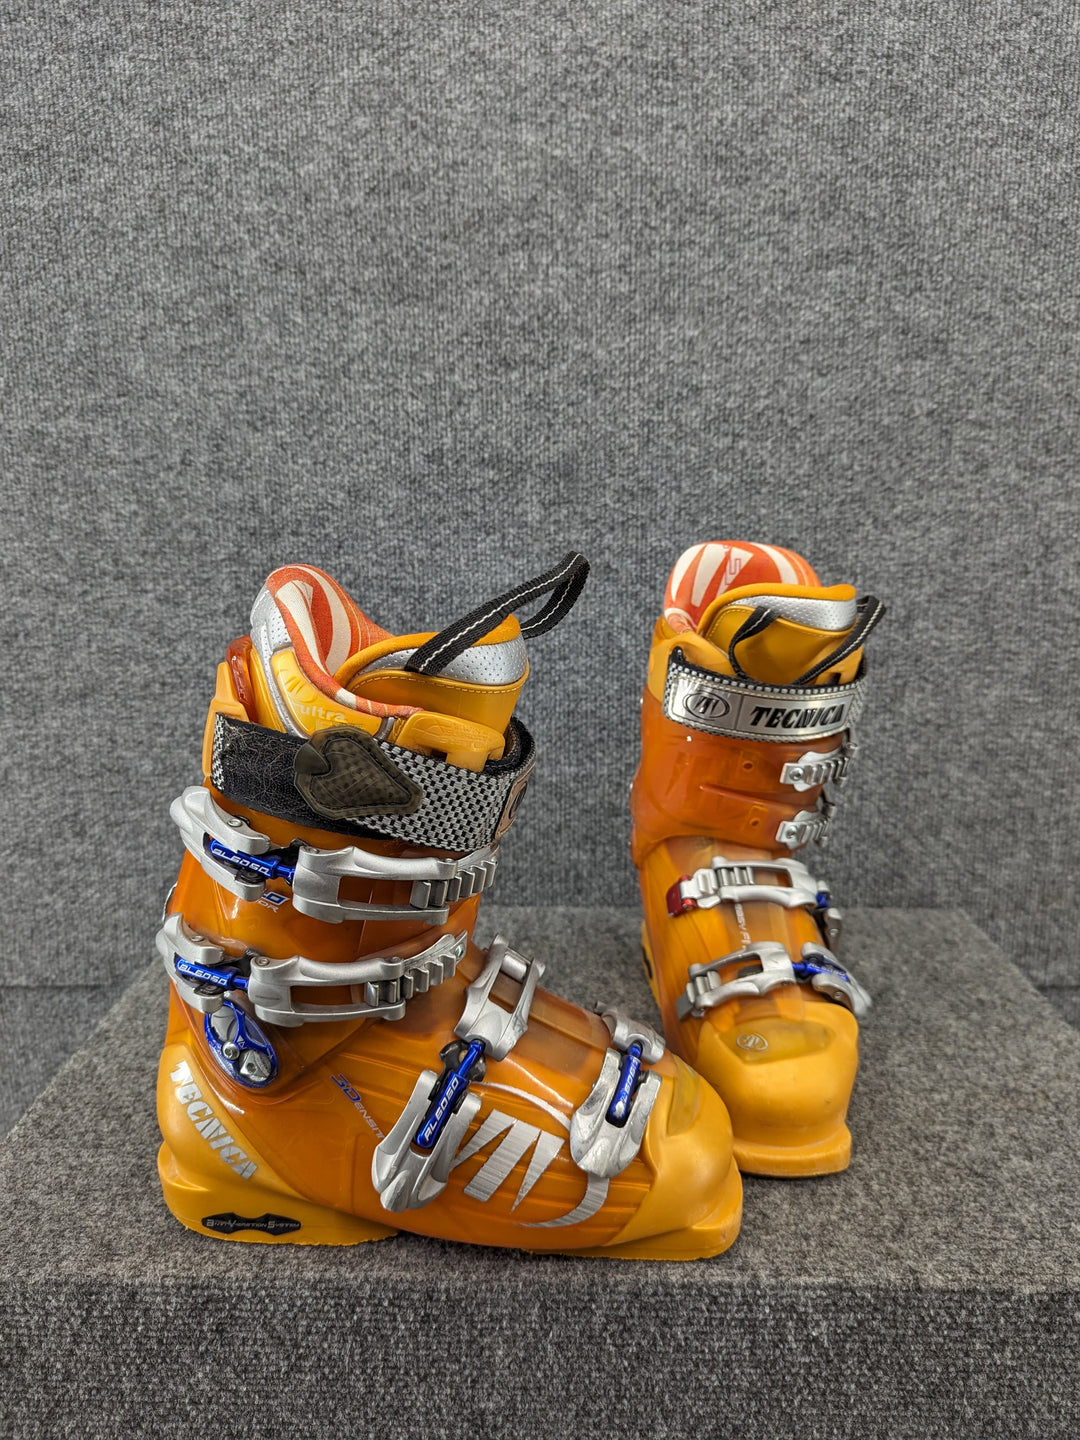 Tecnica Size 6.5/24.5 Men's Alpine Ski Boots